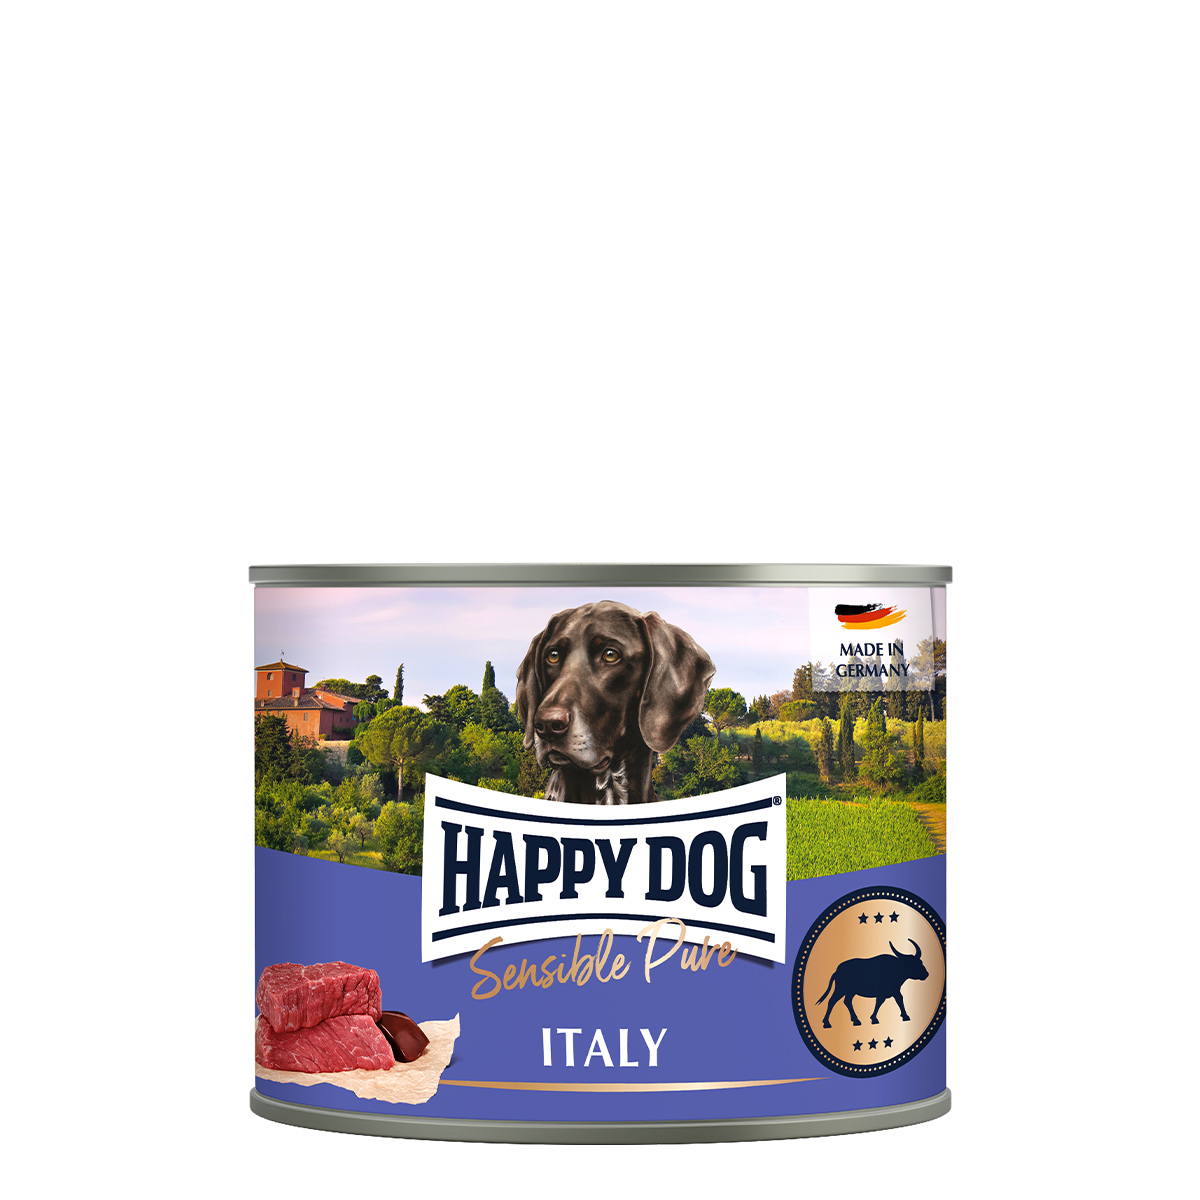 Happy Dog Büffel Pur, 12 x 200 g